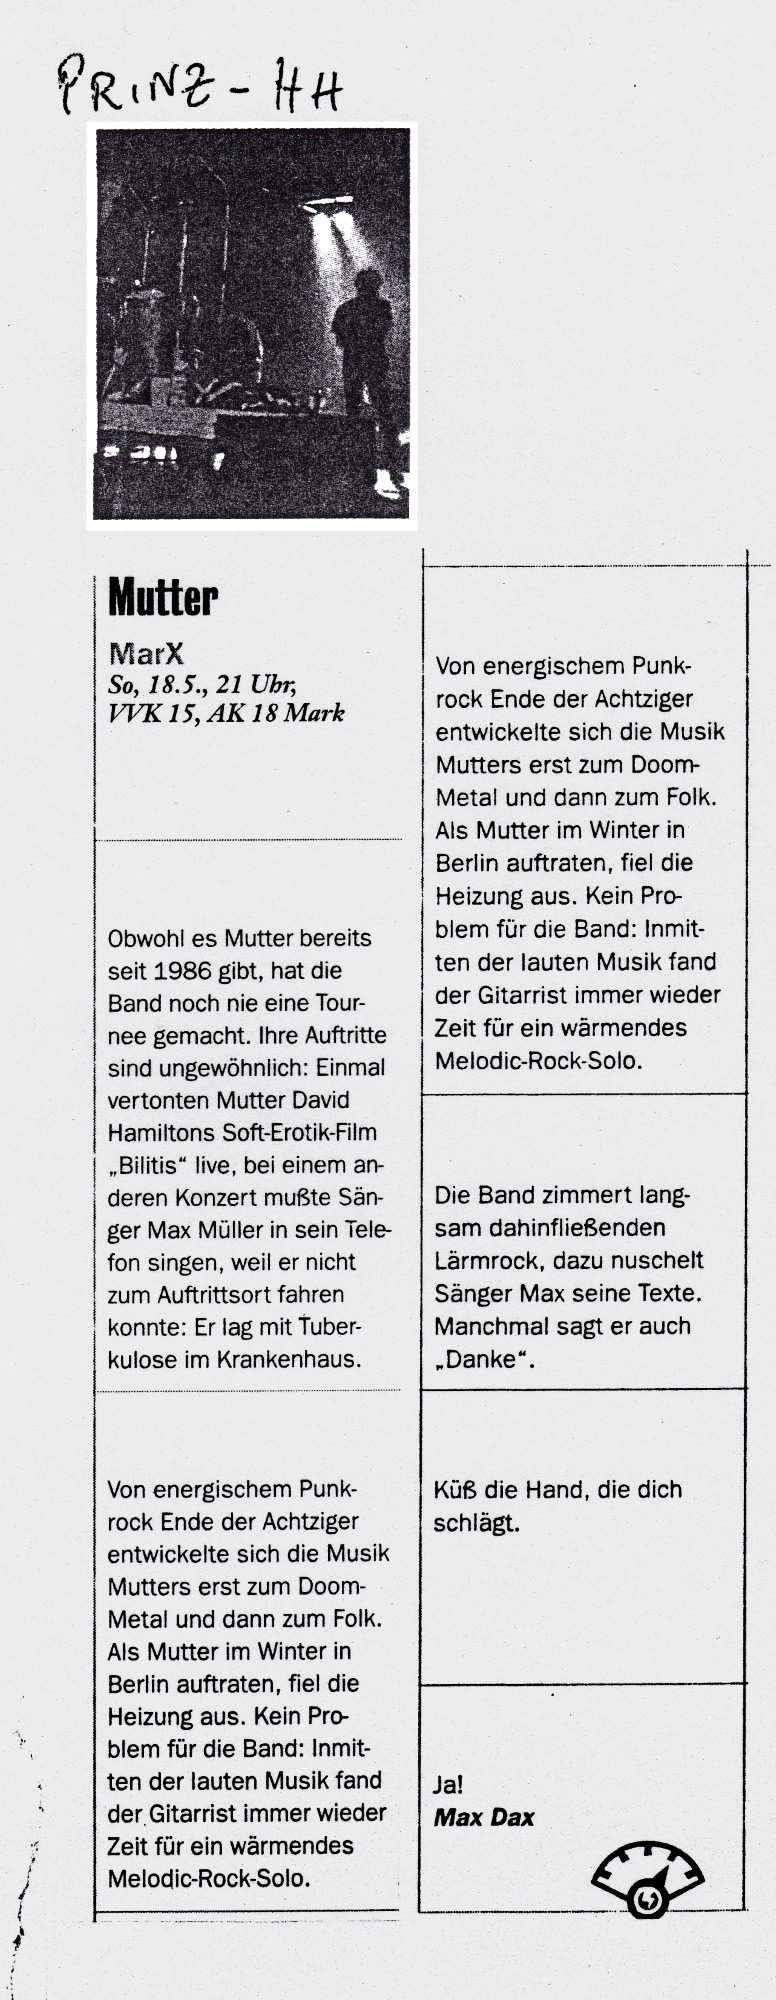 06-Prinz-HH-18.5.97-Marx